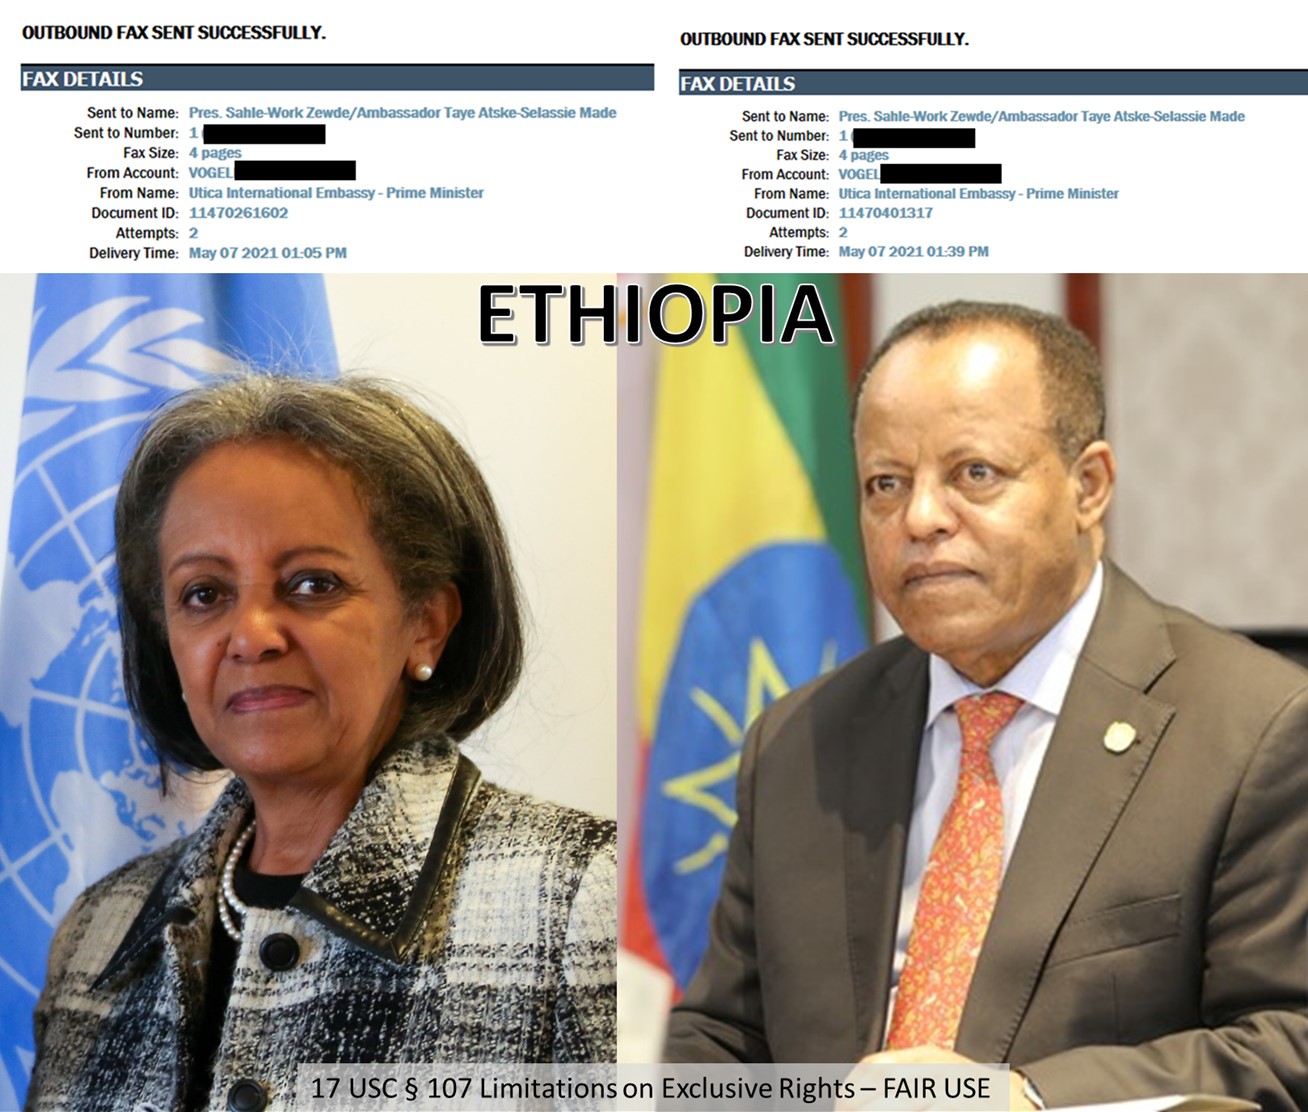 050721 Fax Confirmation Ethiopia